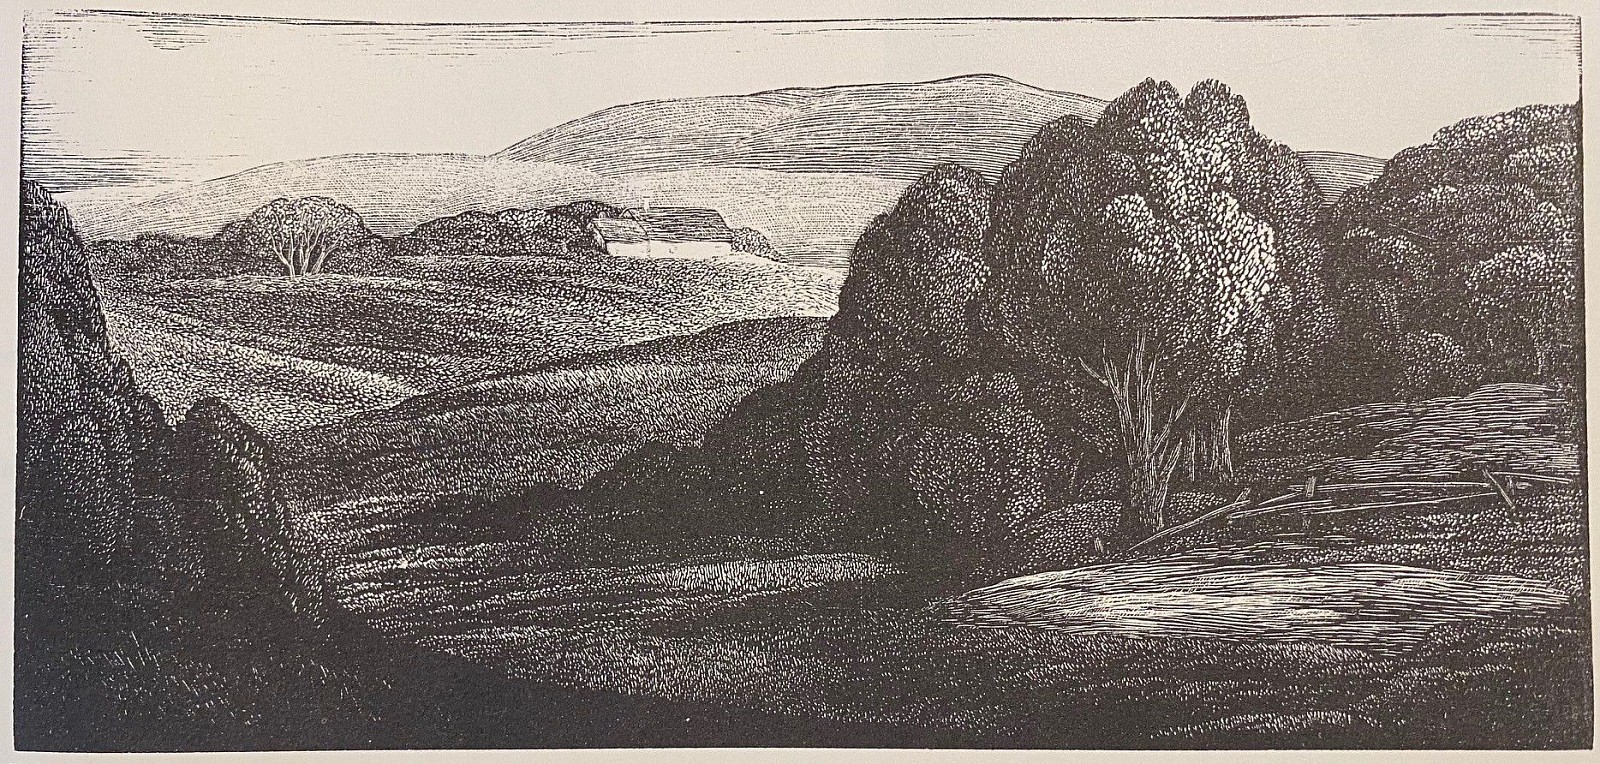 Thomas Willoughby Nason, Upland Pastures, 1933
wood engraving on paper, 3 1/2"" x 7 1/2""
JCA 6529
$1,100